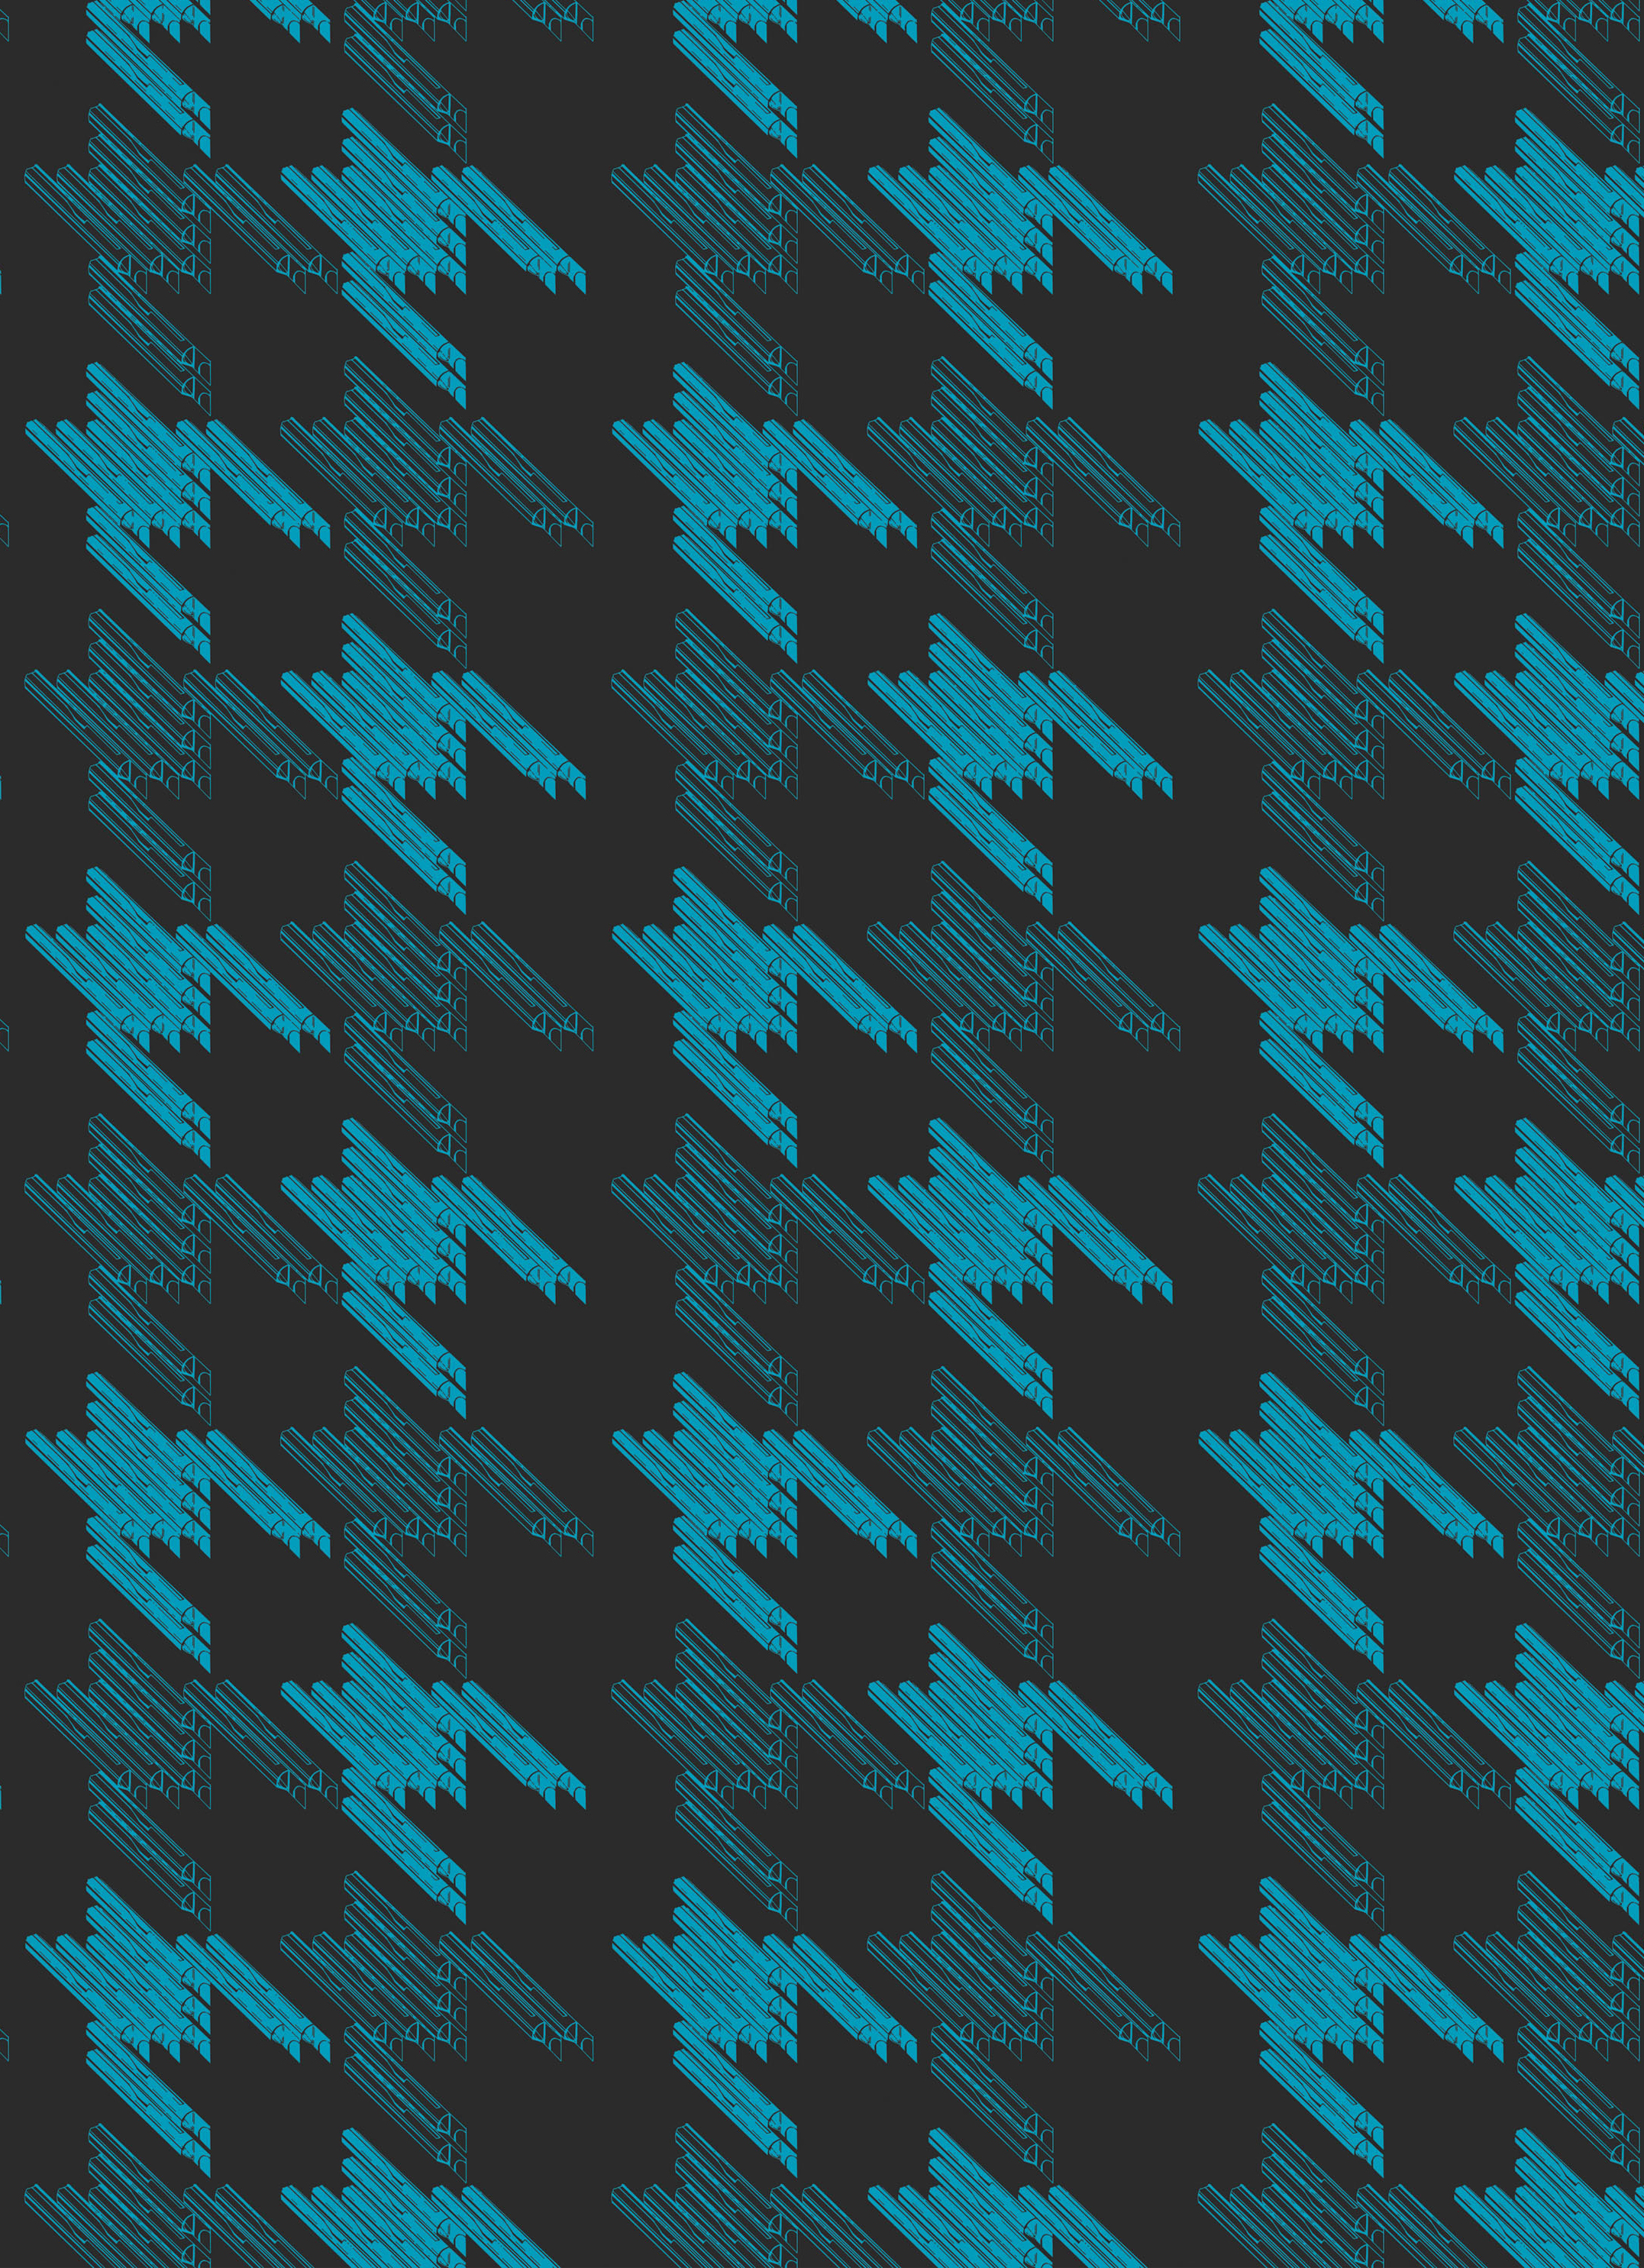 Turquoise and Black Wallpaper - WallpaperSafari2153 x 2970